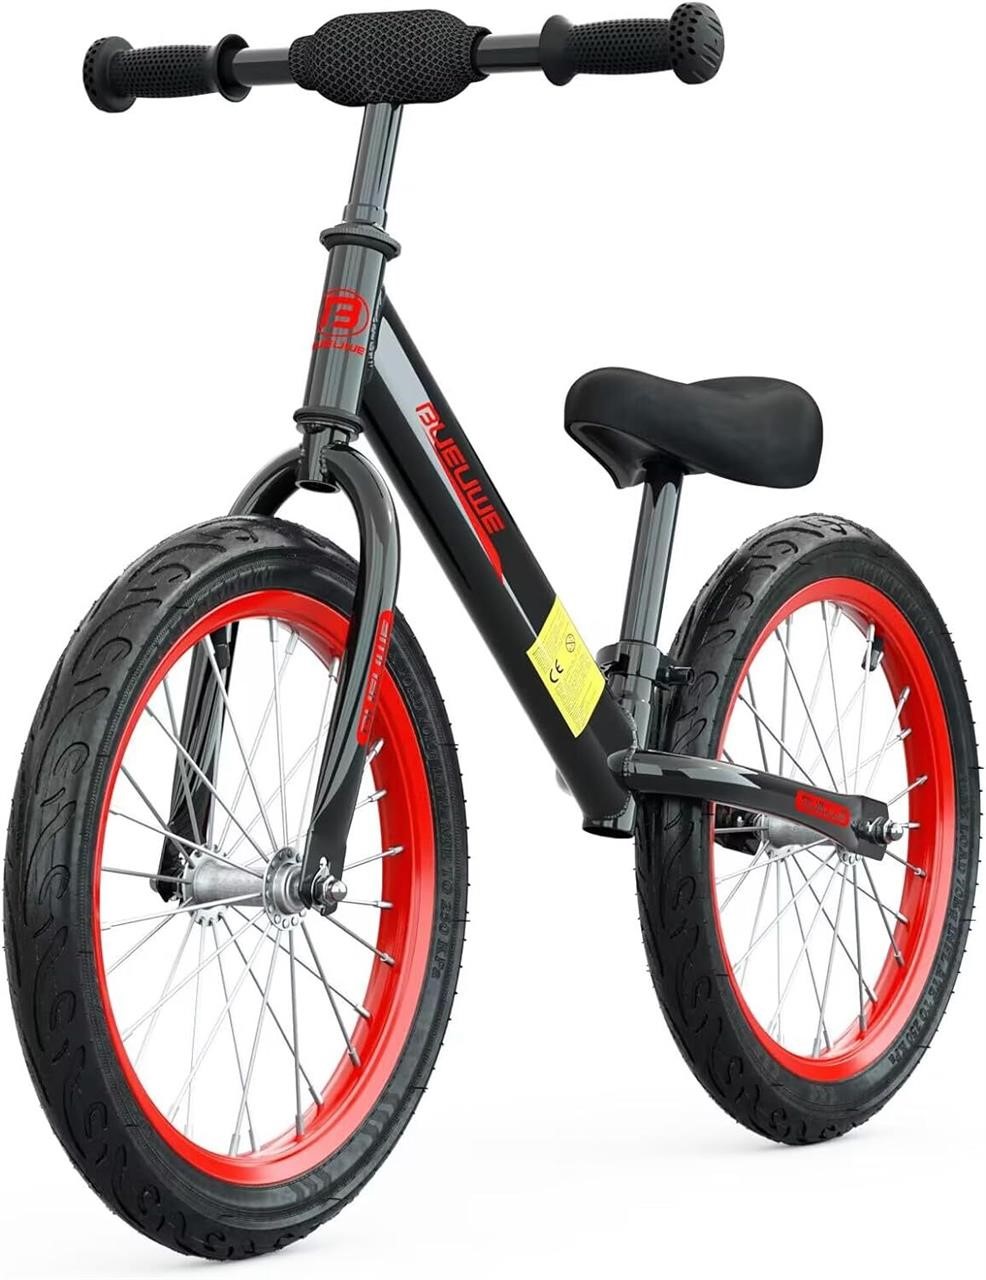 Bueuwe 16 inch Balance Bike for Boys & Girls